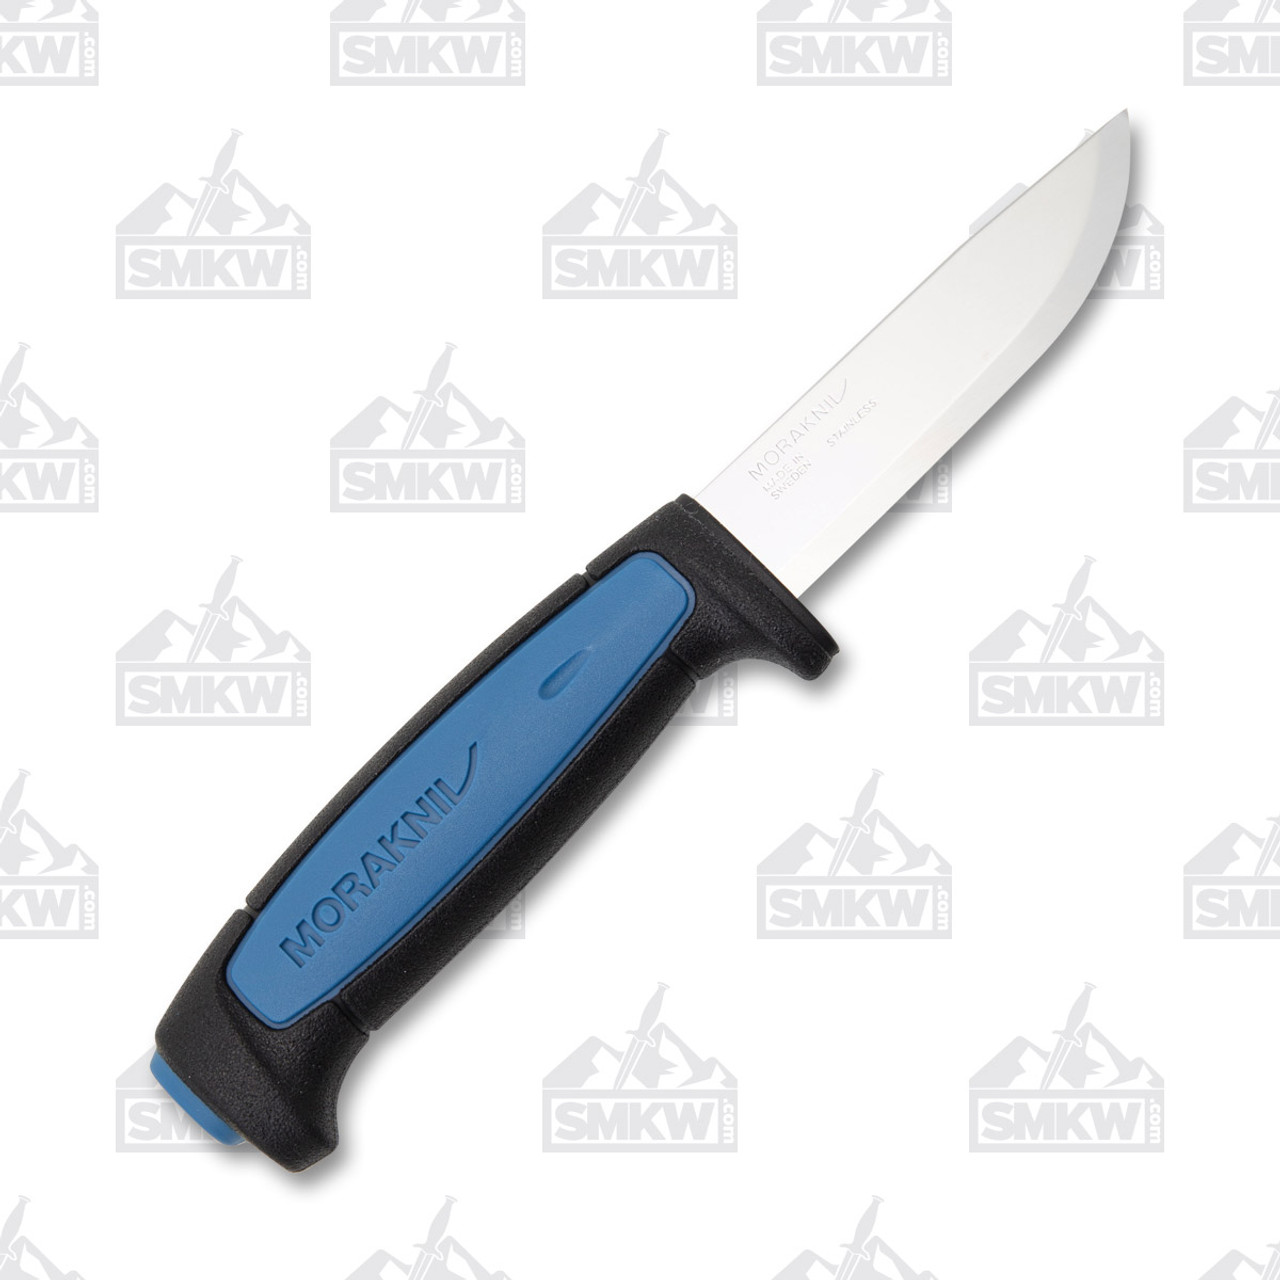 Morakniv Pro S Fixed Blade Knife - Smoky Mountain Knife Works